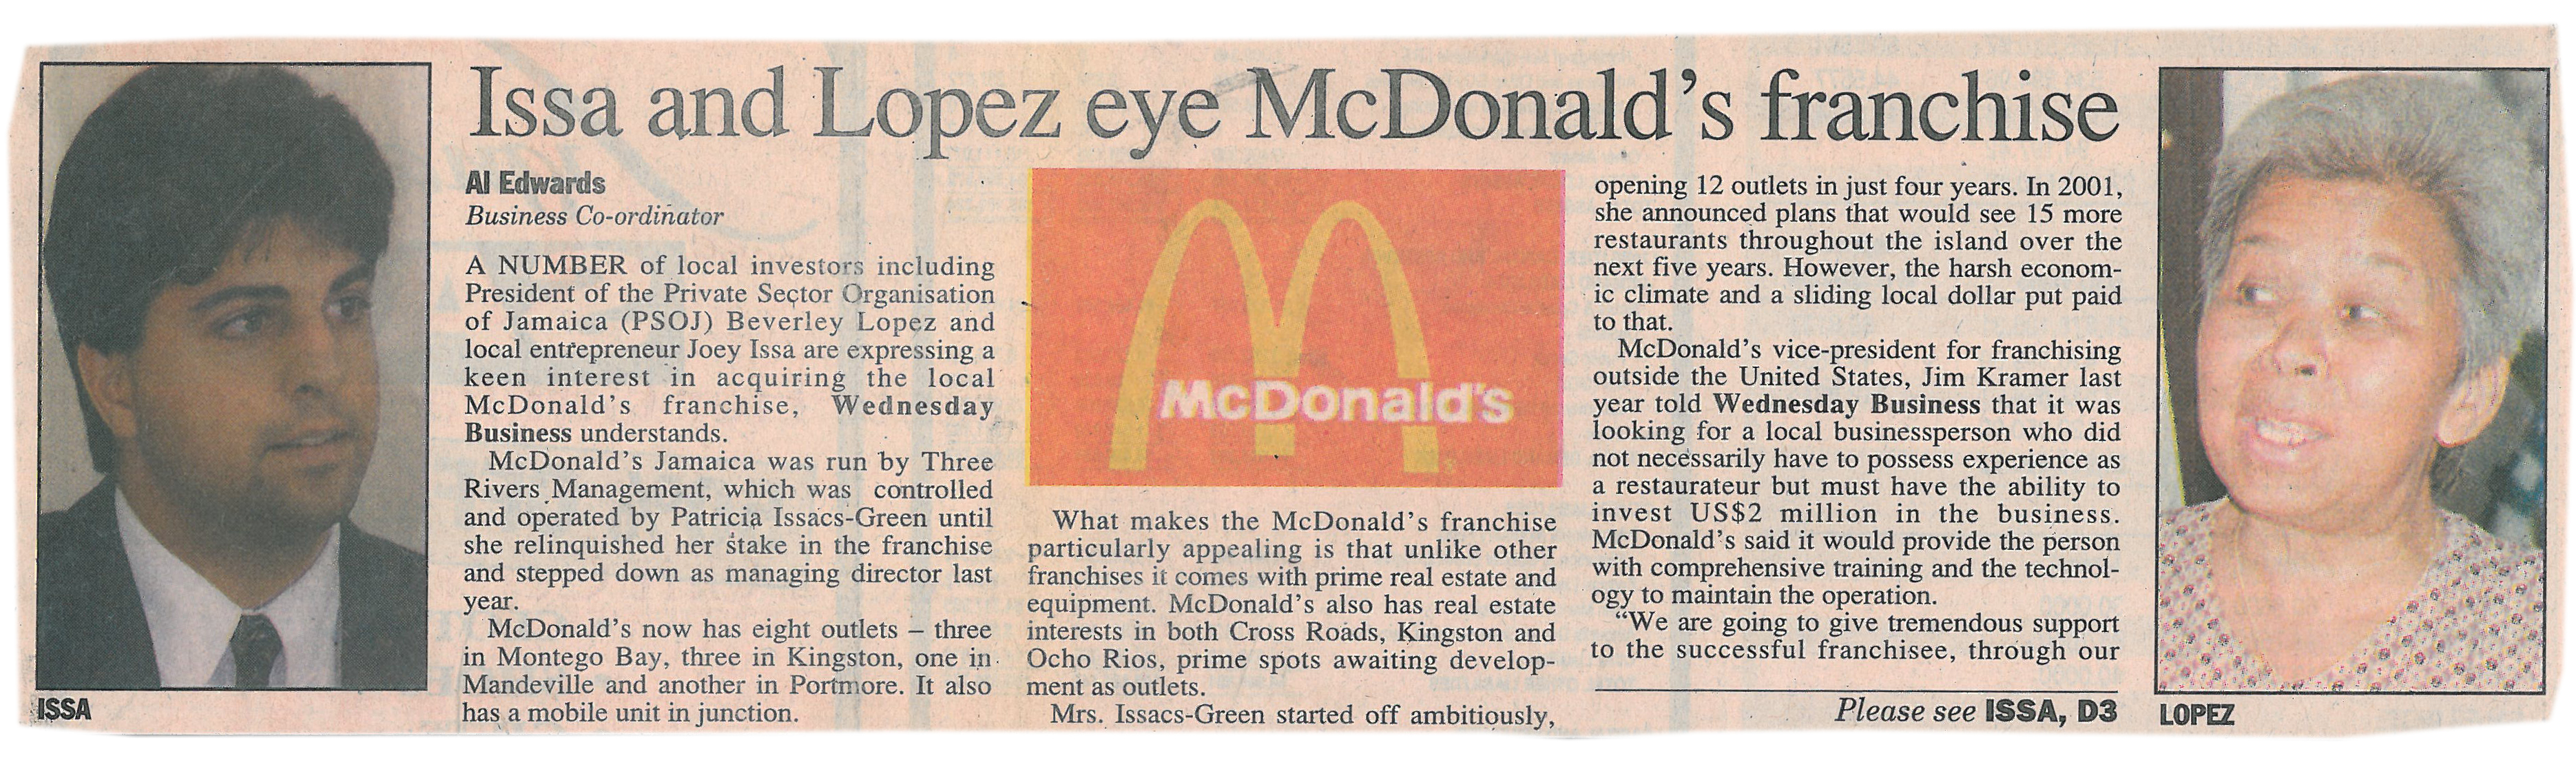 Issa and Lopez eye McDonald’s franchise